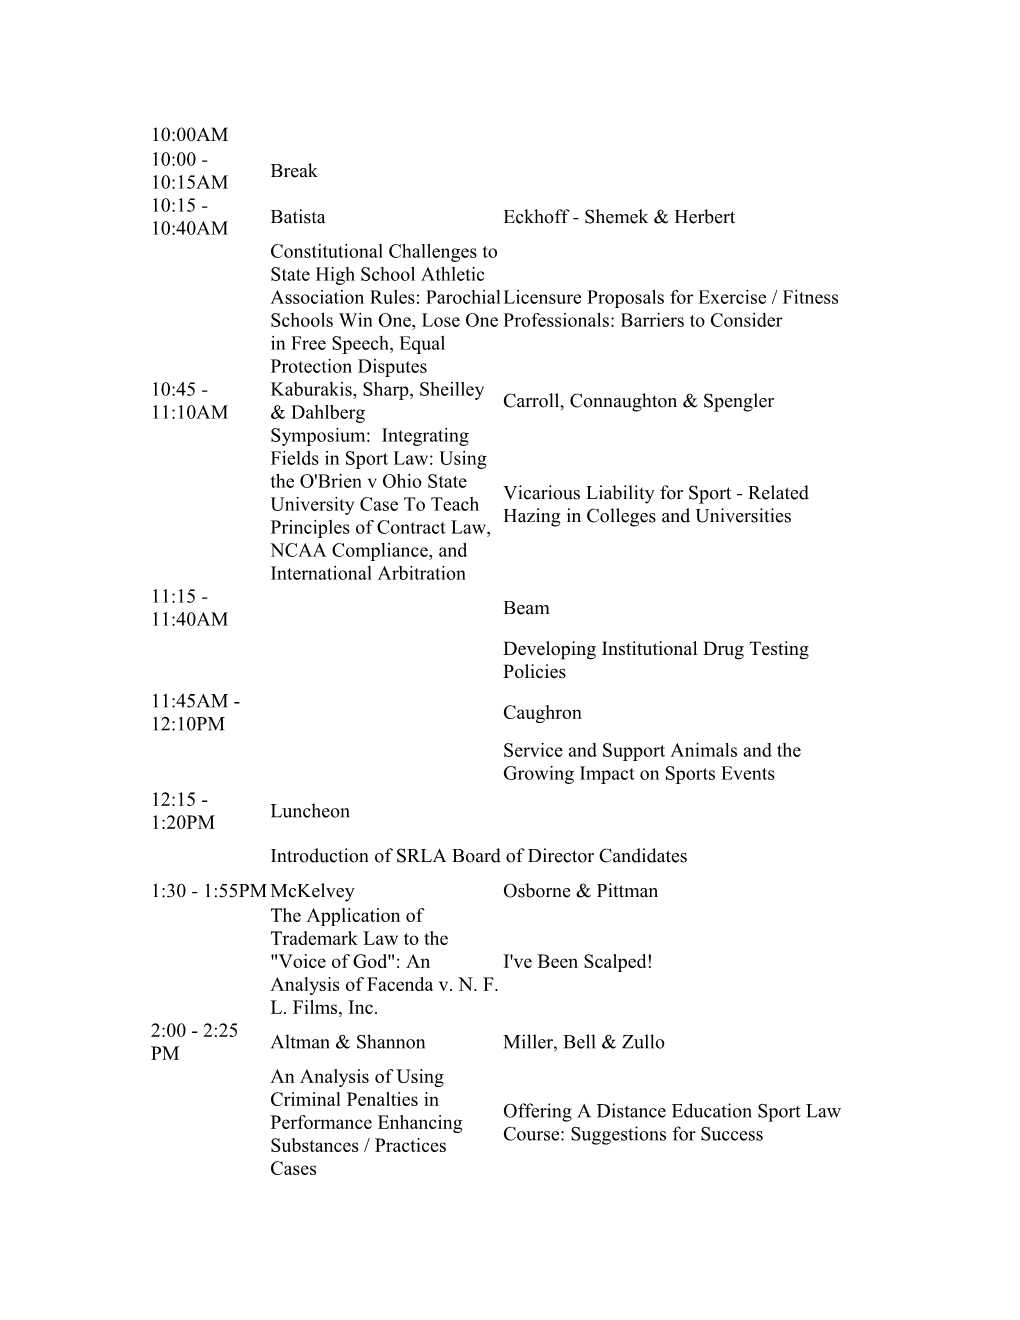 SRLA 2008 Program and Presentation Notes